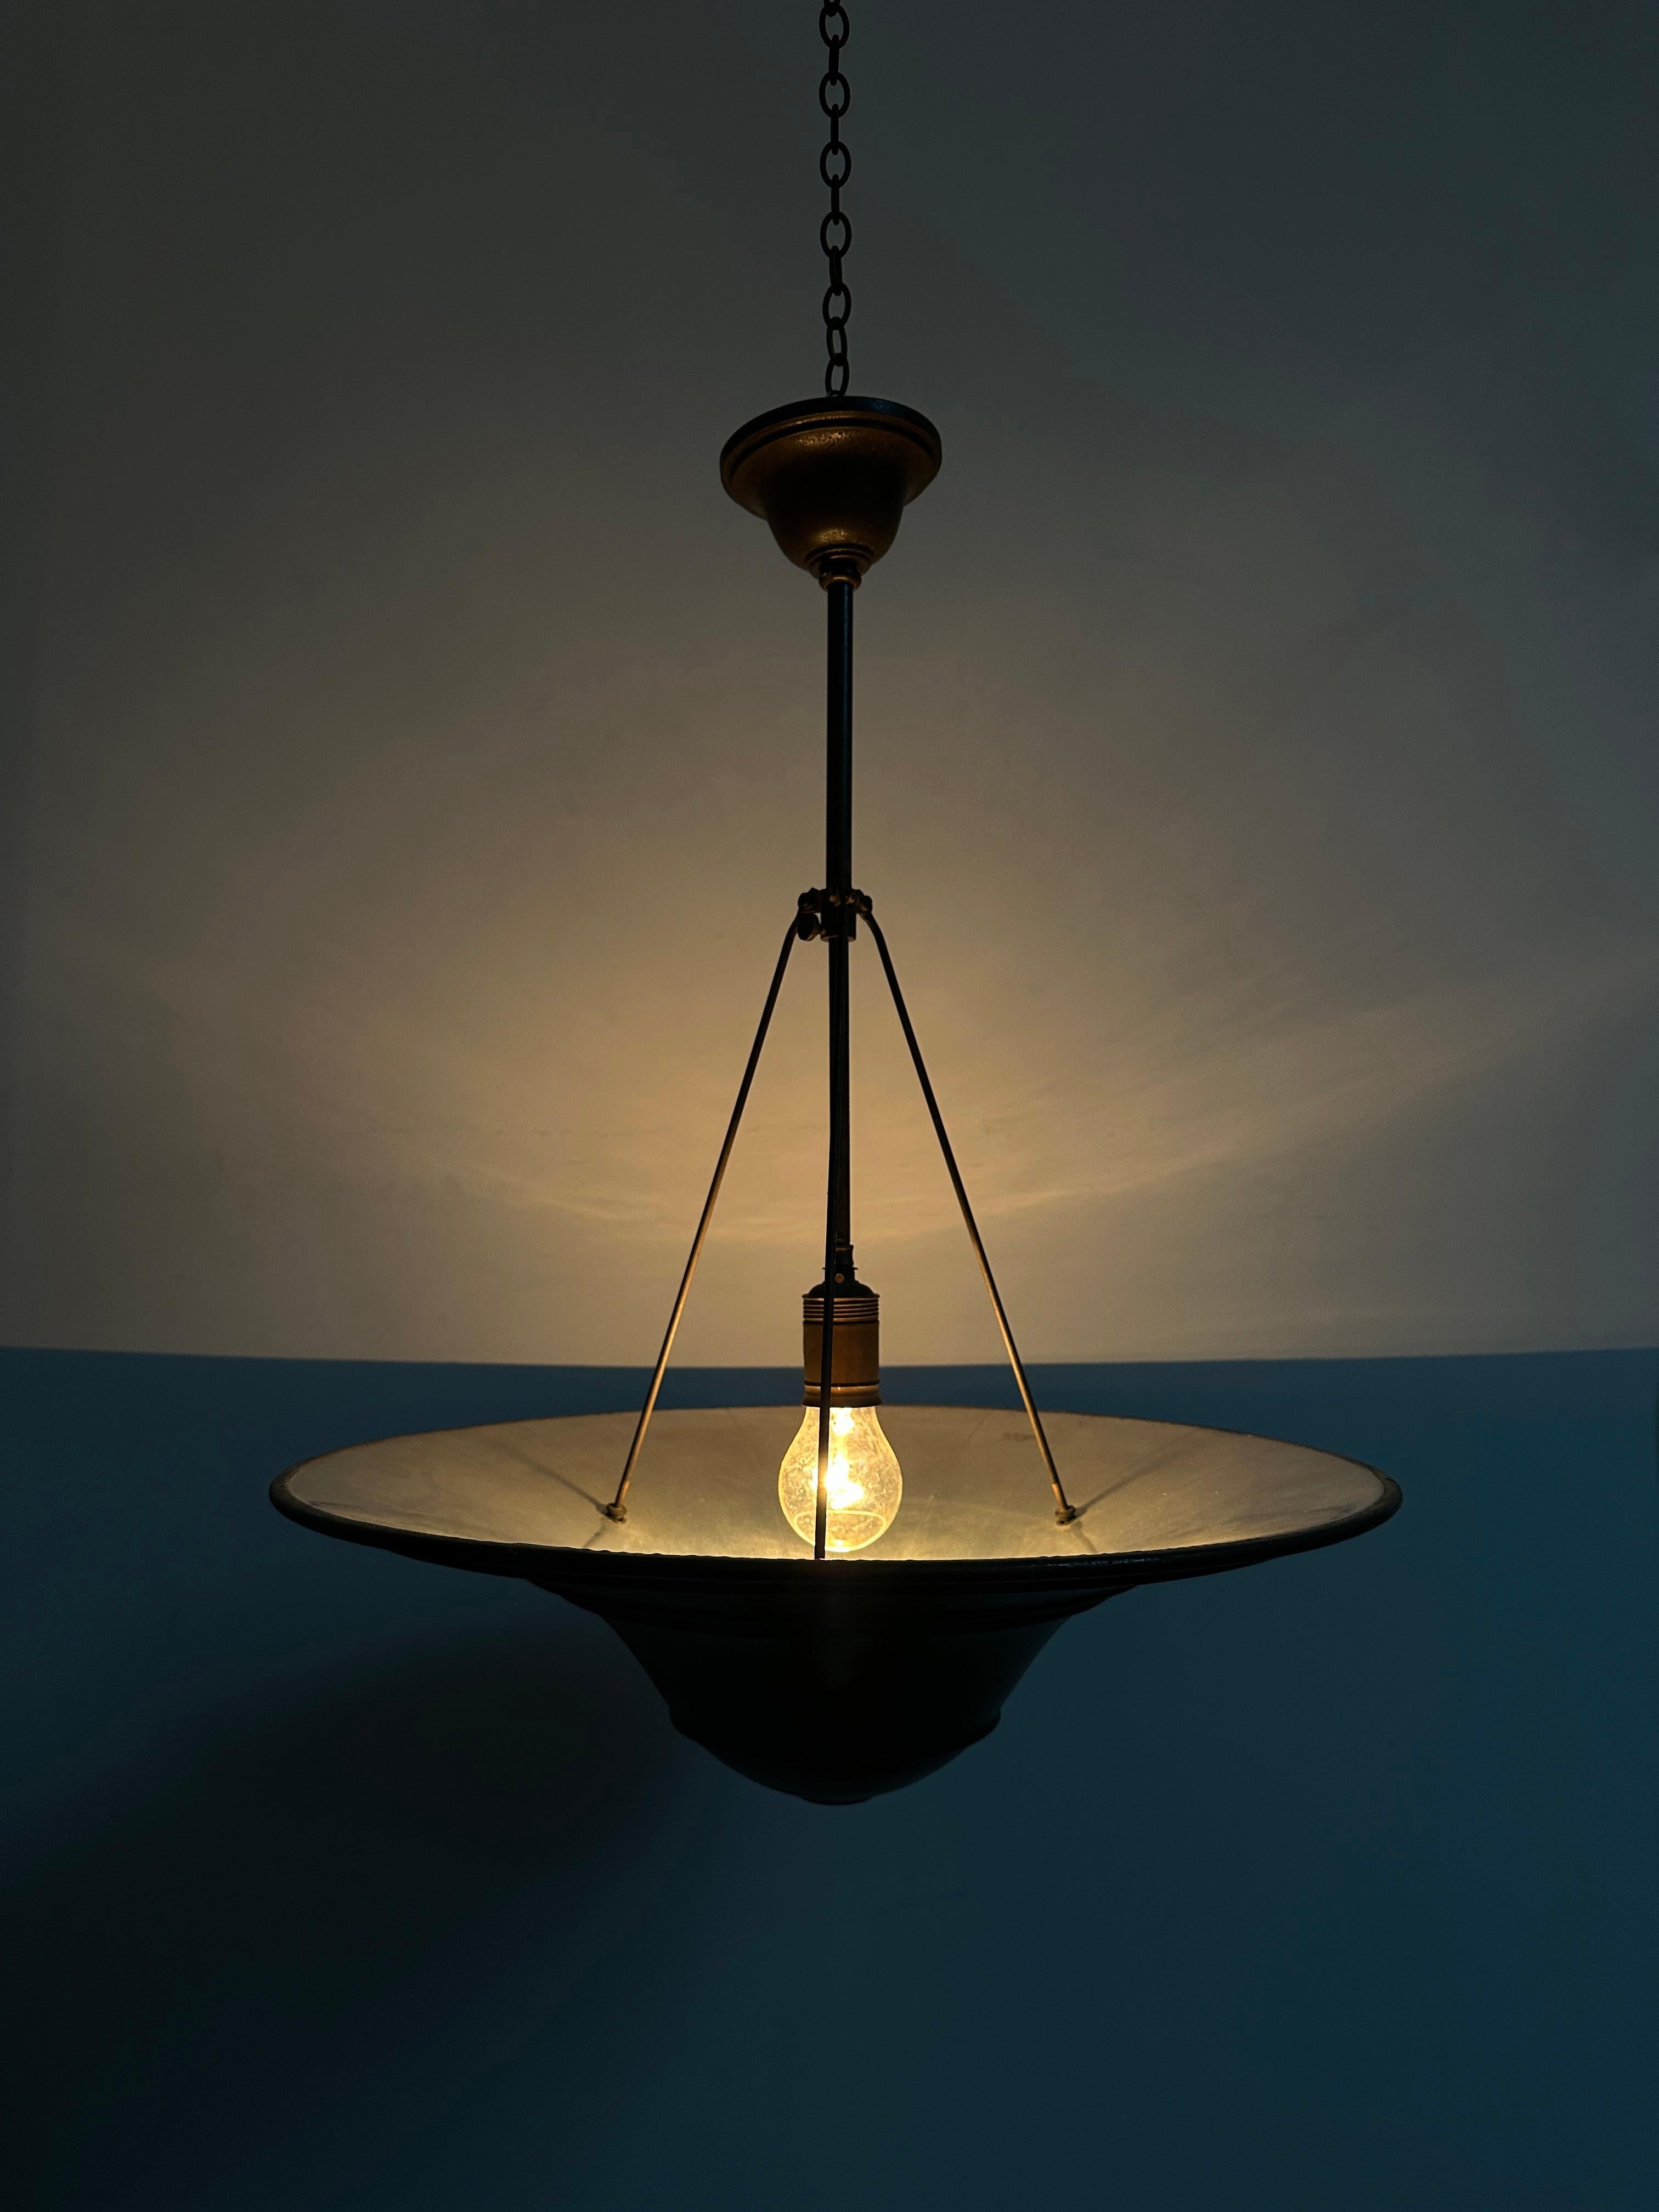 Antique Vintage Industrial Bauhaus Wiskott Mirrored Ceiling Pendant Light Lamp For Sale 1